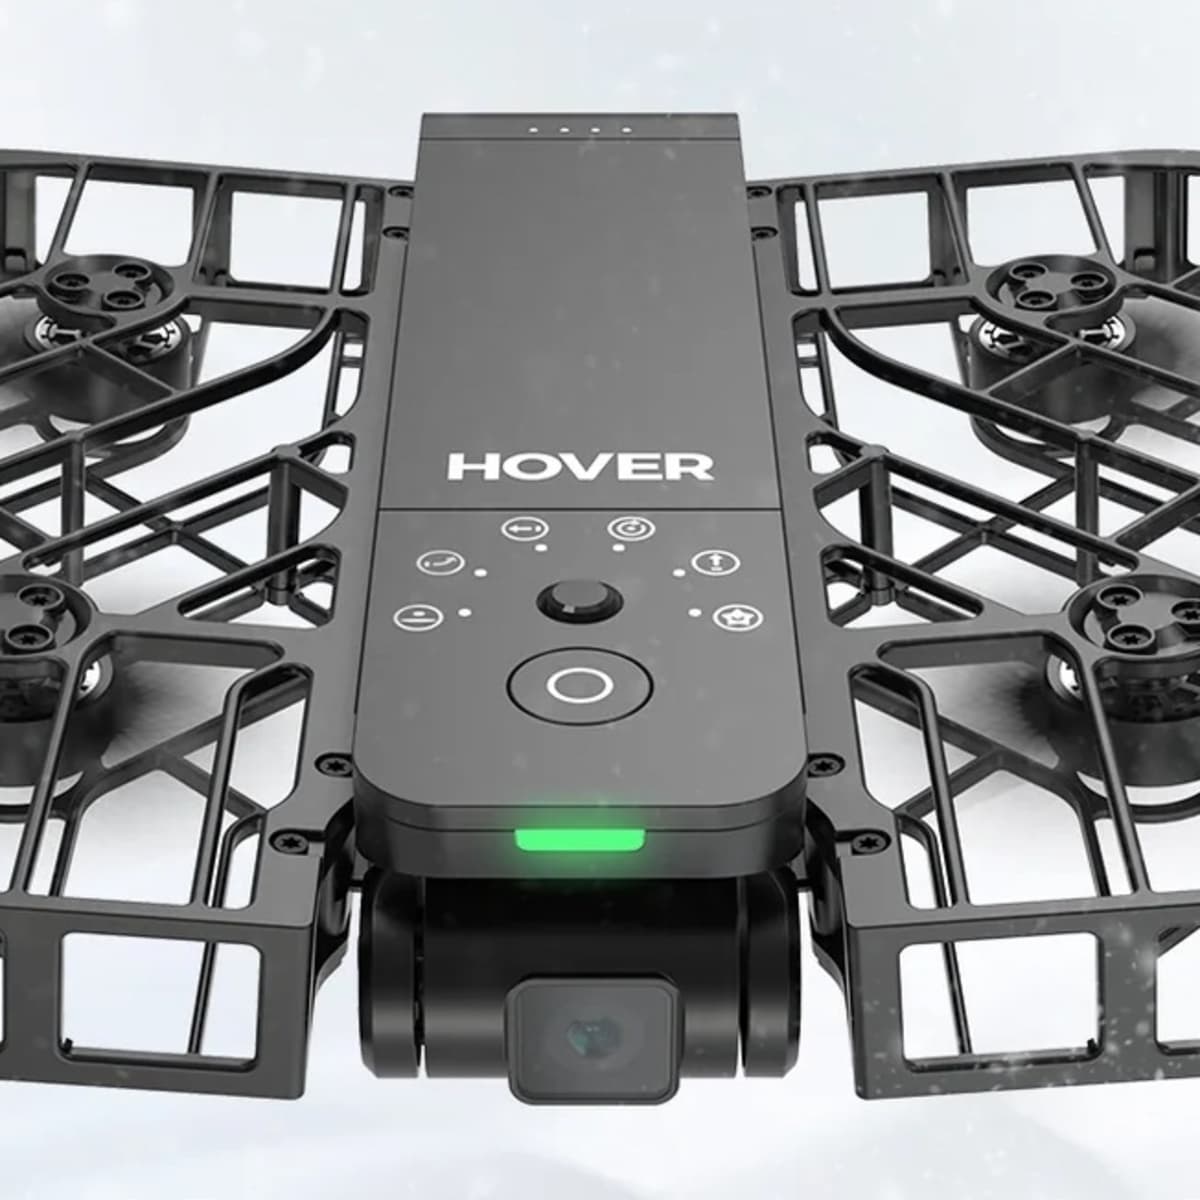 Hover Camera X1 Review - Camera Jabber